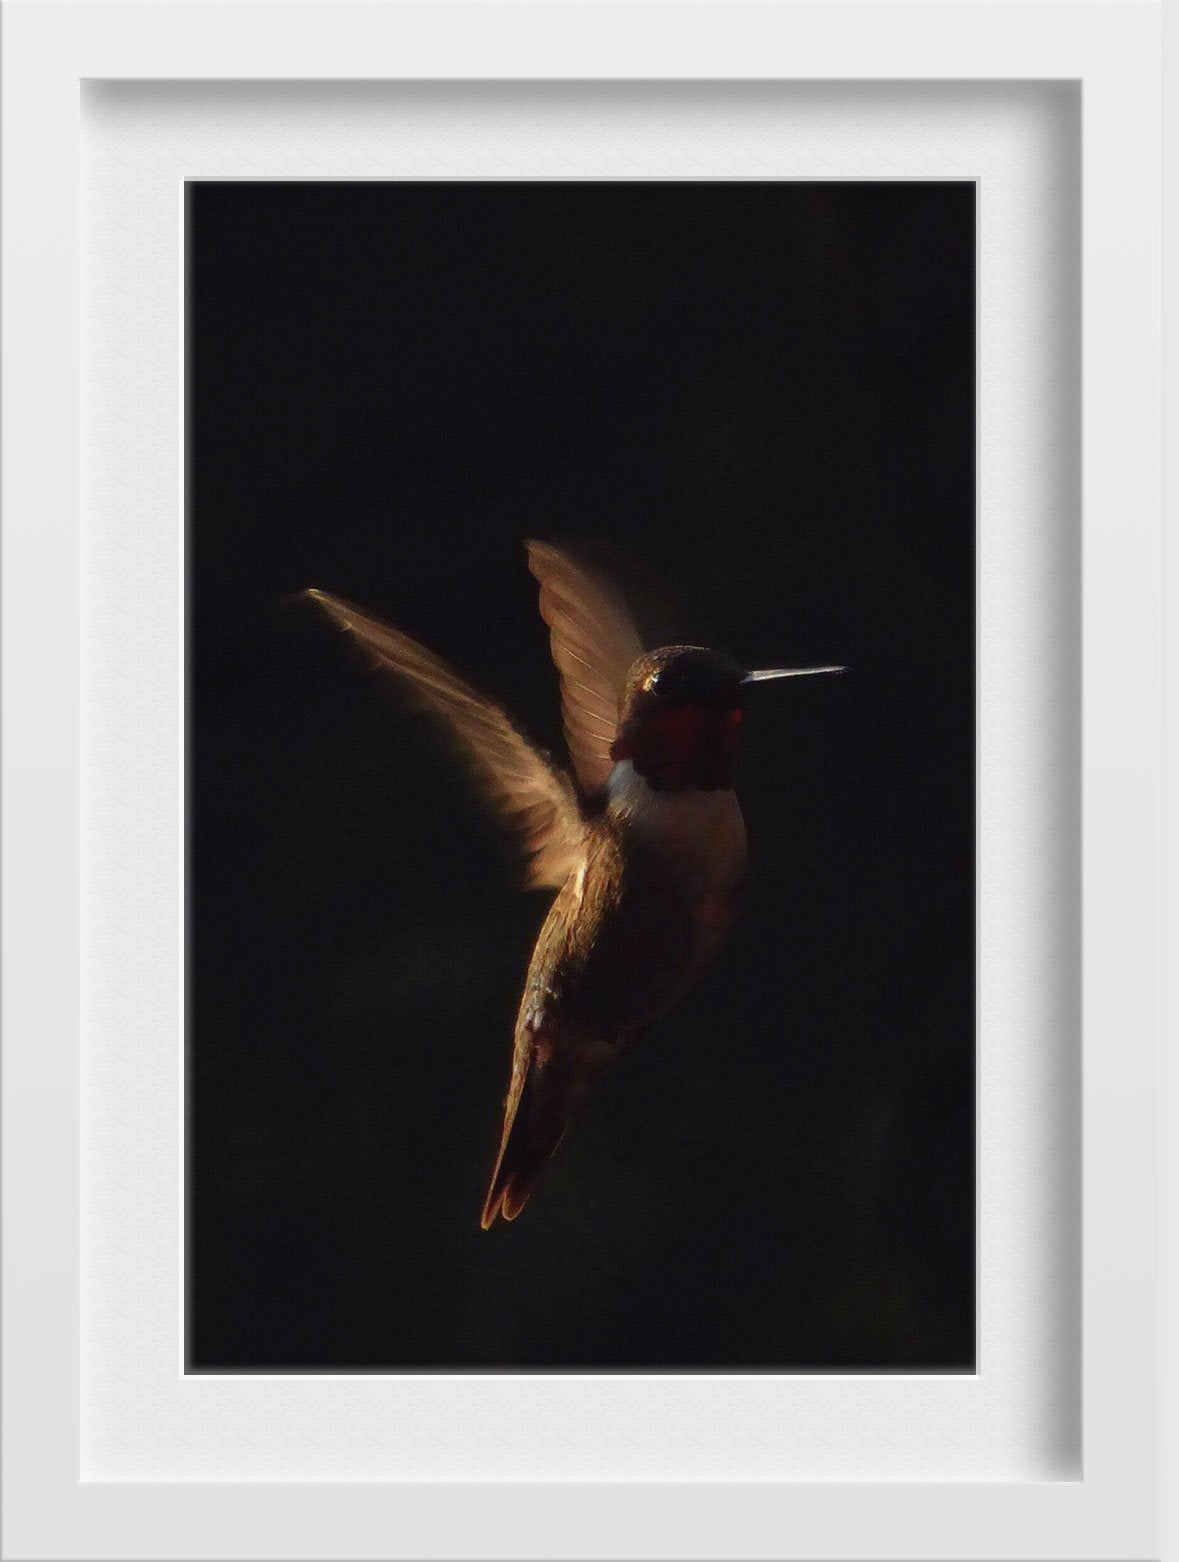 The humming bird Painting - Meri Deewar - MeriDeewar